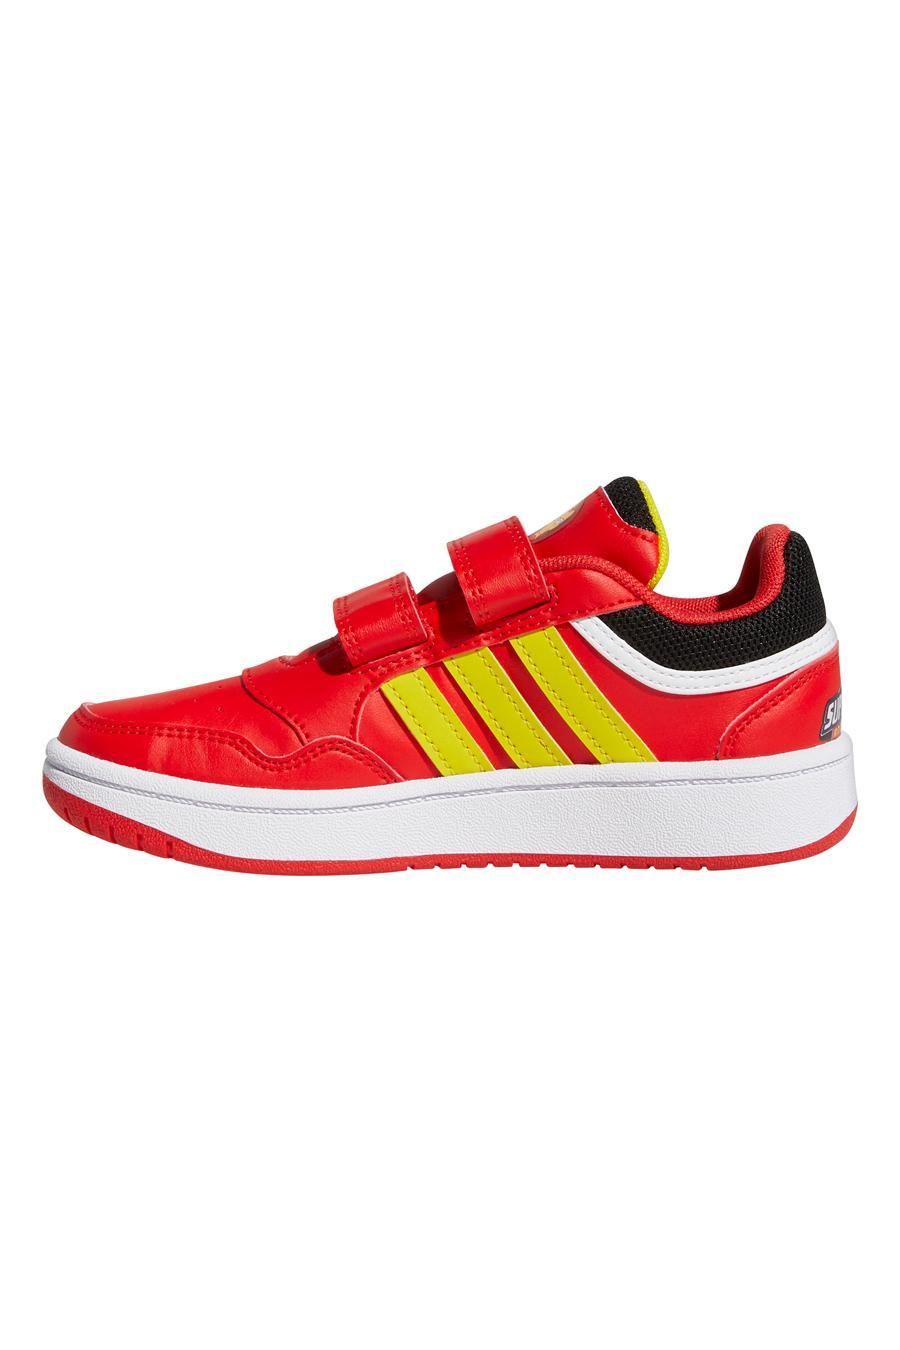 adidas sneakers adidas superhero cf c hoops 3.0 gy5536. da bambino, colore rosso